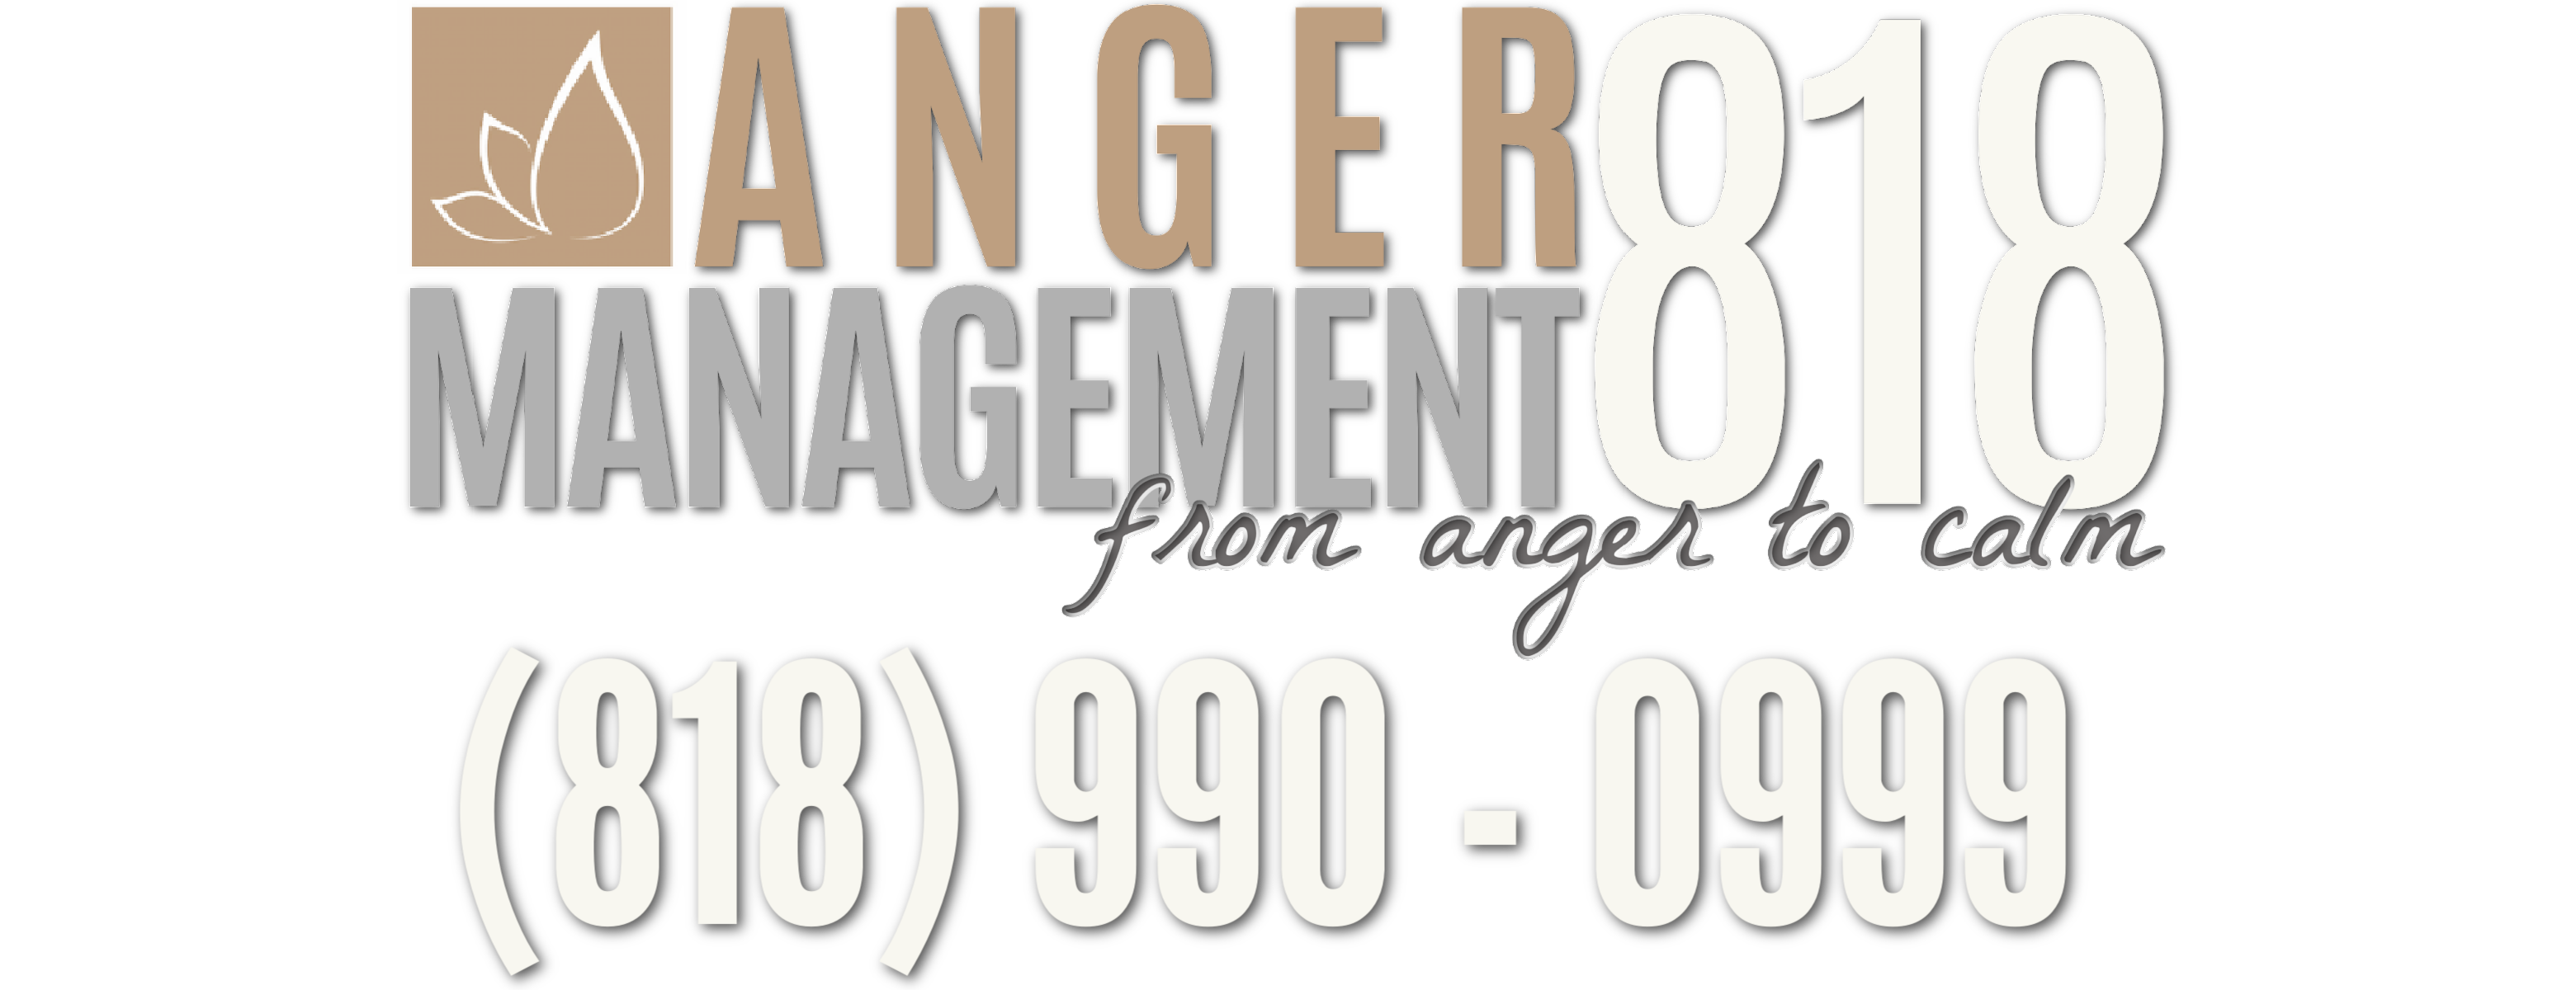 Anger Management (818) 990-0999